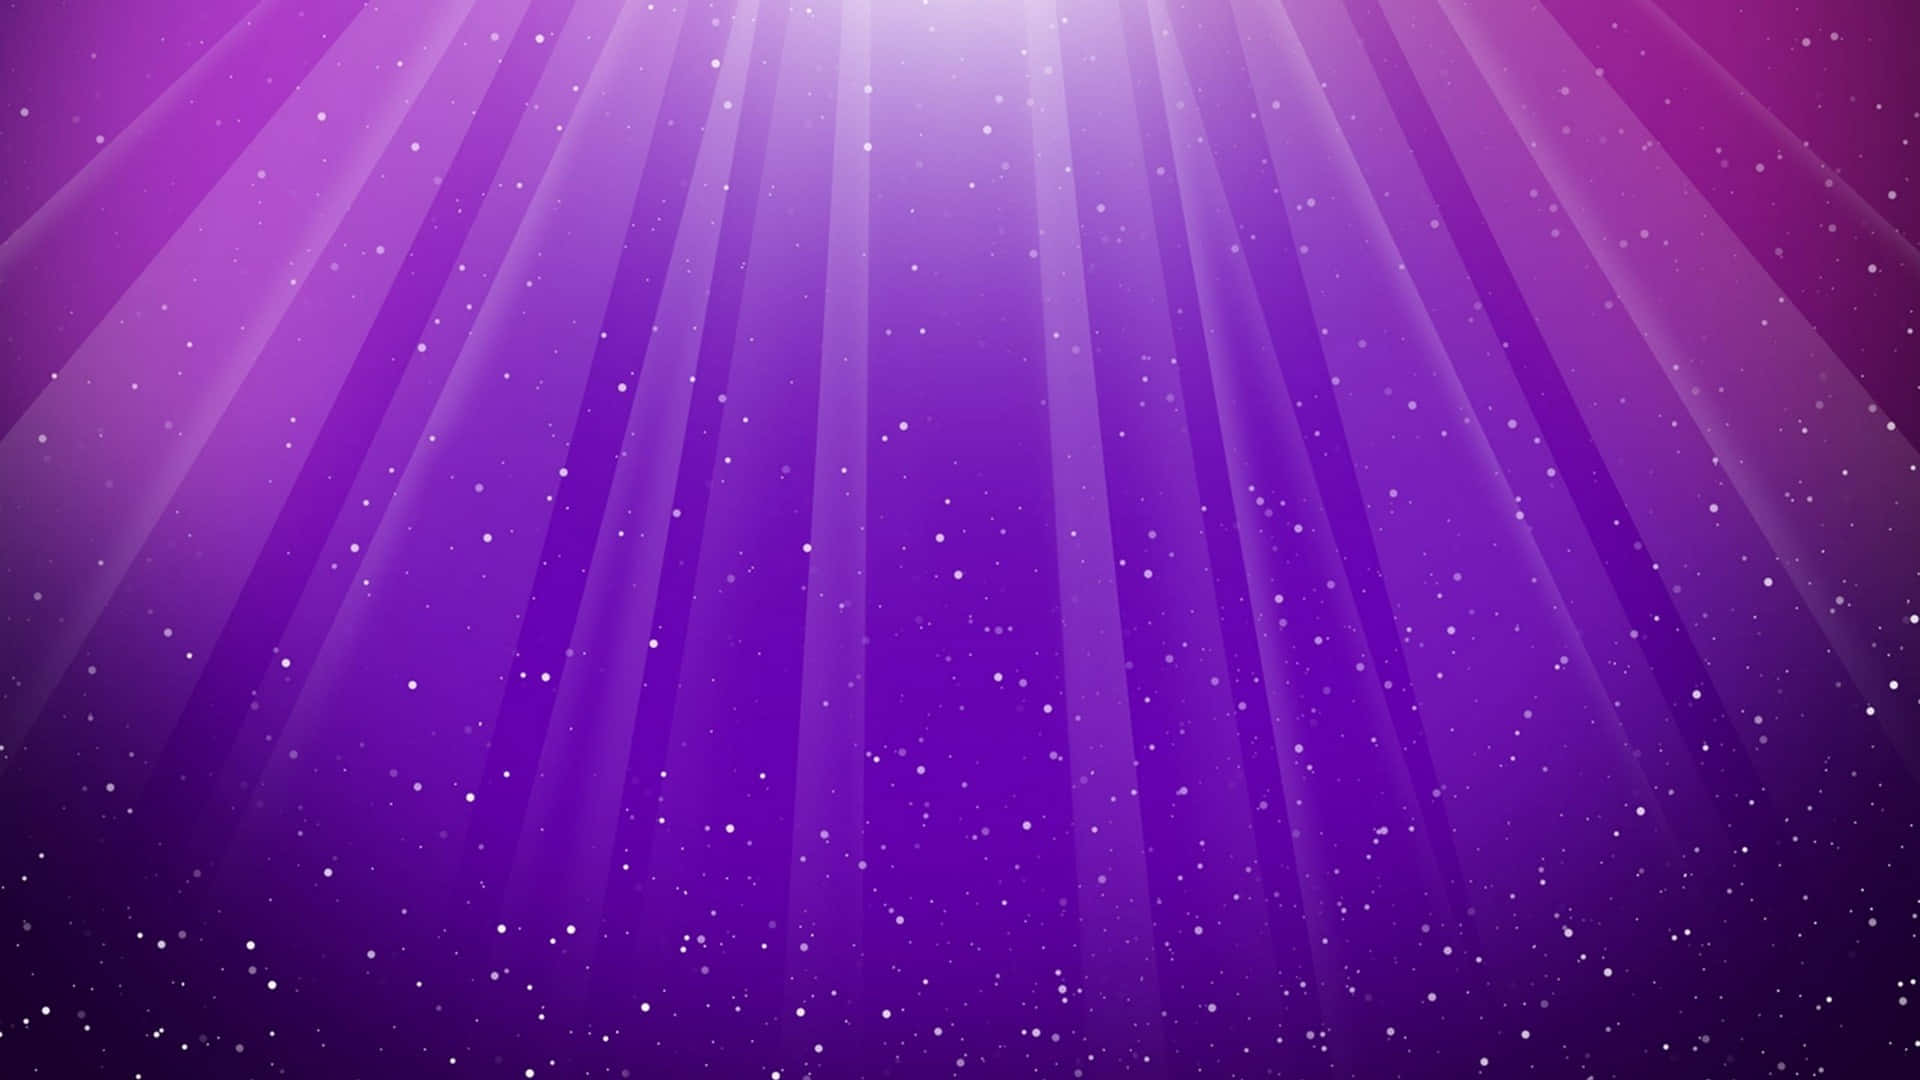 Illuminated purple hues in a dreamy swirl Wallpaper